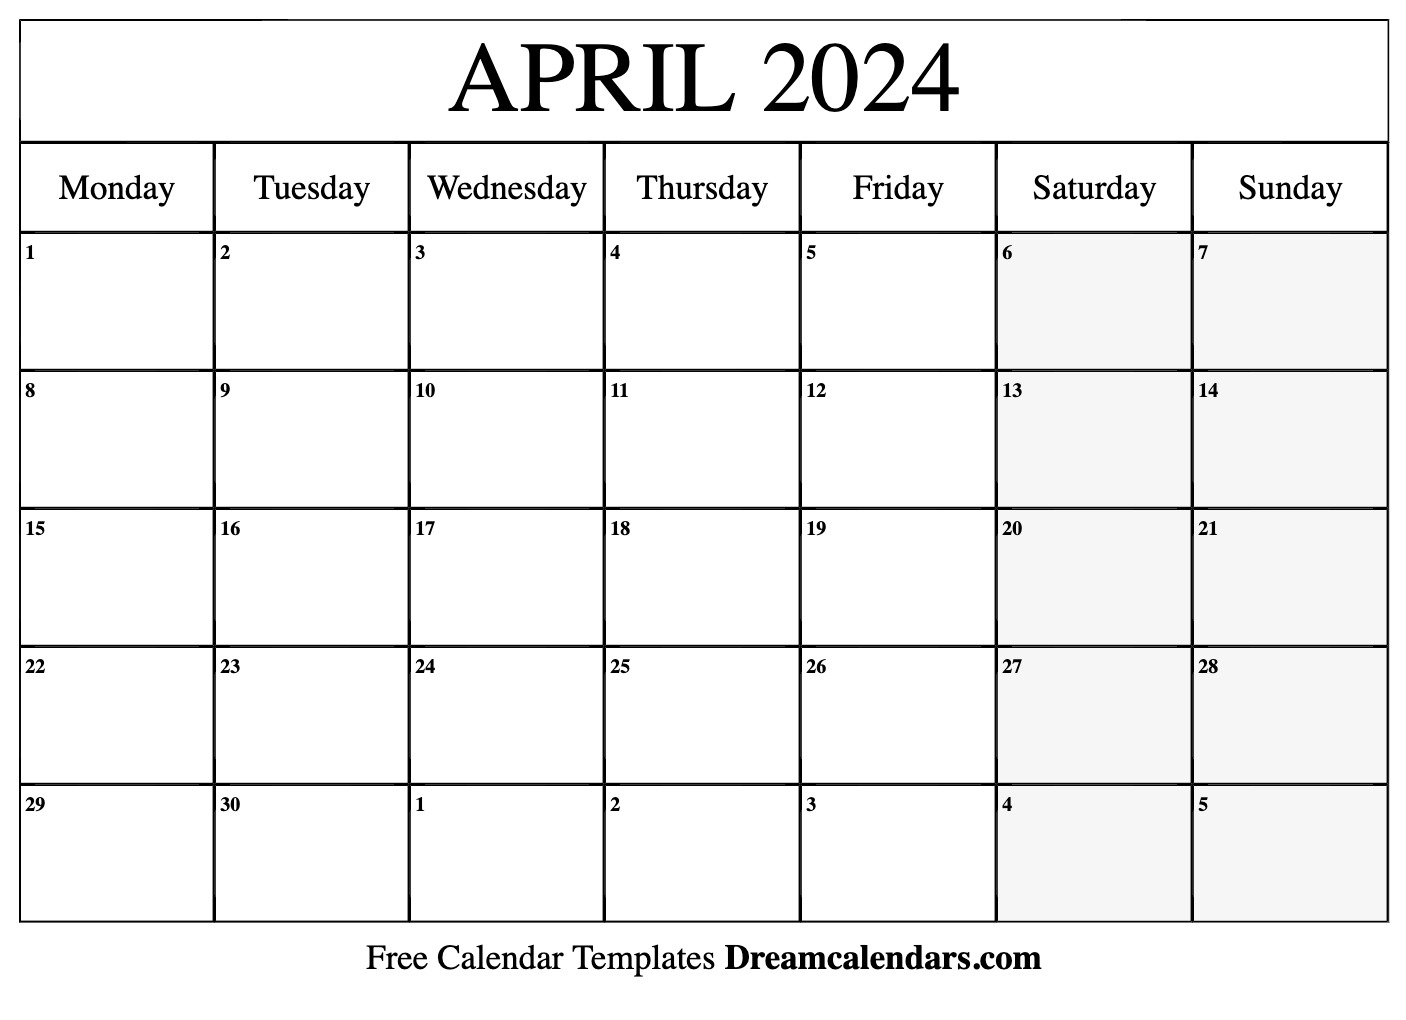 April 2024 Calendar | Free Blank Printable With Holidays for Calendar Printable 2024 April